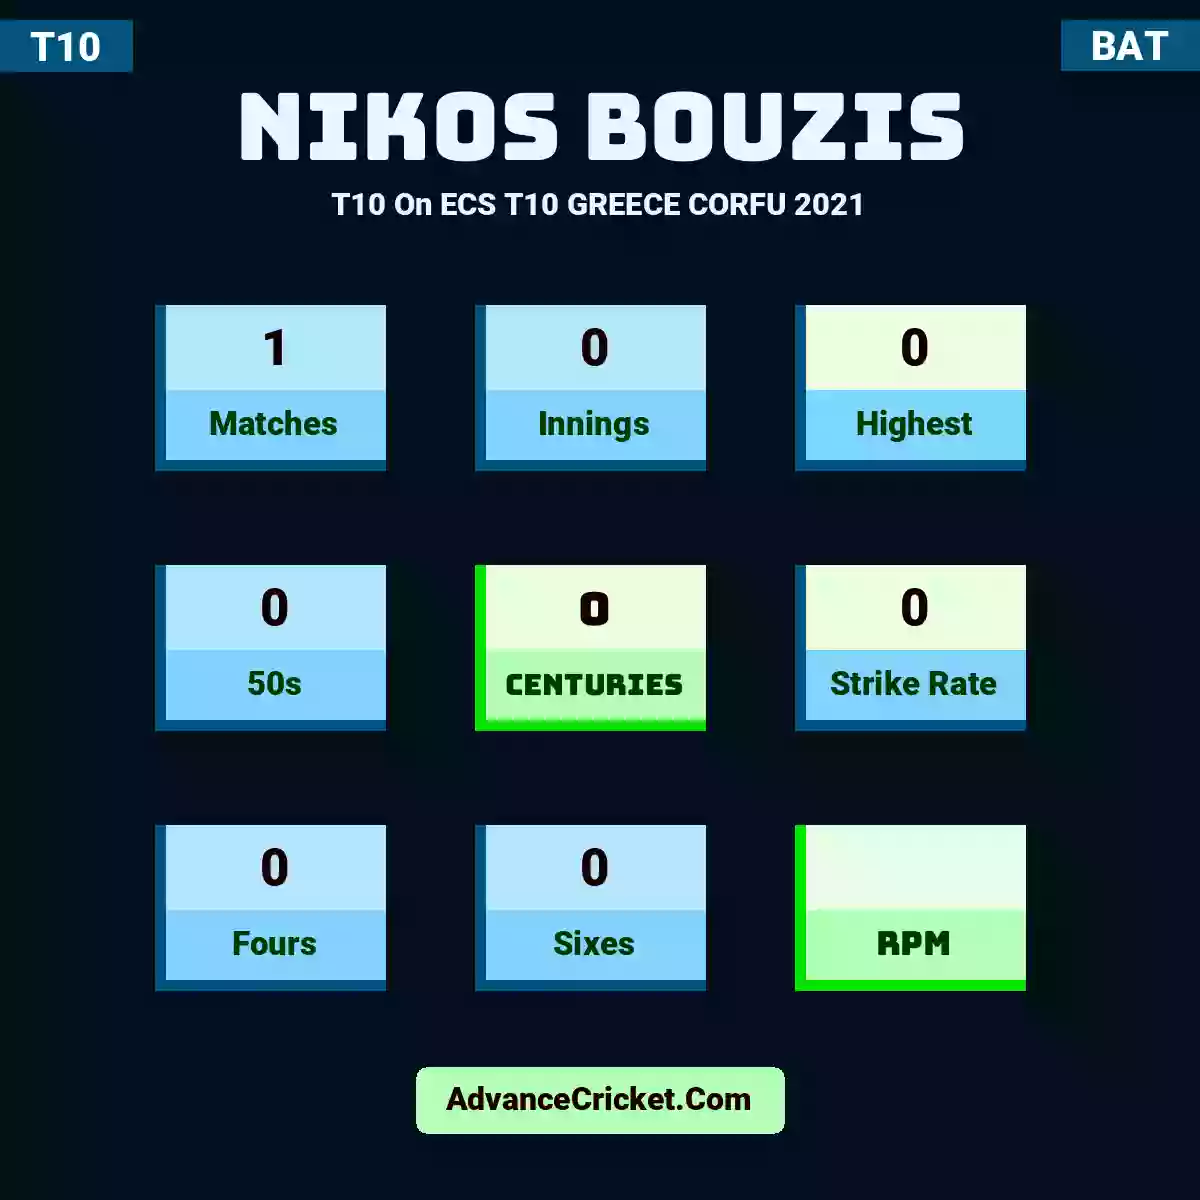 Nikos Bouzis T10  On ECS T10 GREECE CORFU 2021, Nikos Bouzis played 1 matches, scored 0 runs as highest, 0 half-centuries, and 0 centuries, with a strike rate of 0. N.Bouzis hit 0 fours and 0 sixes.